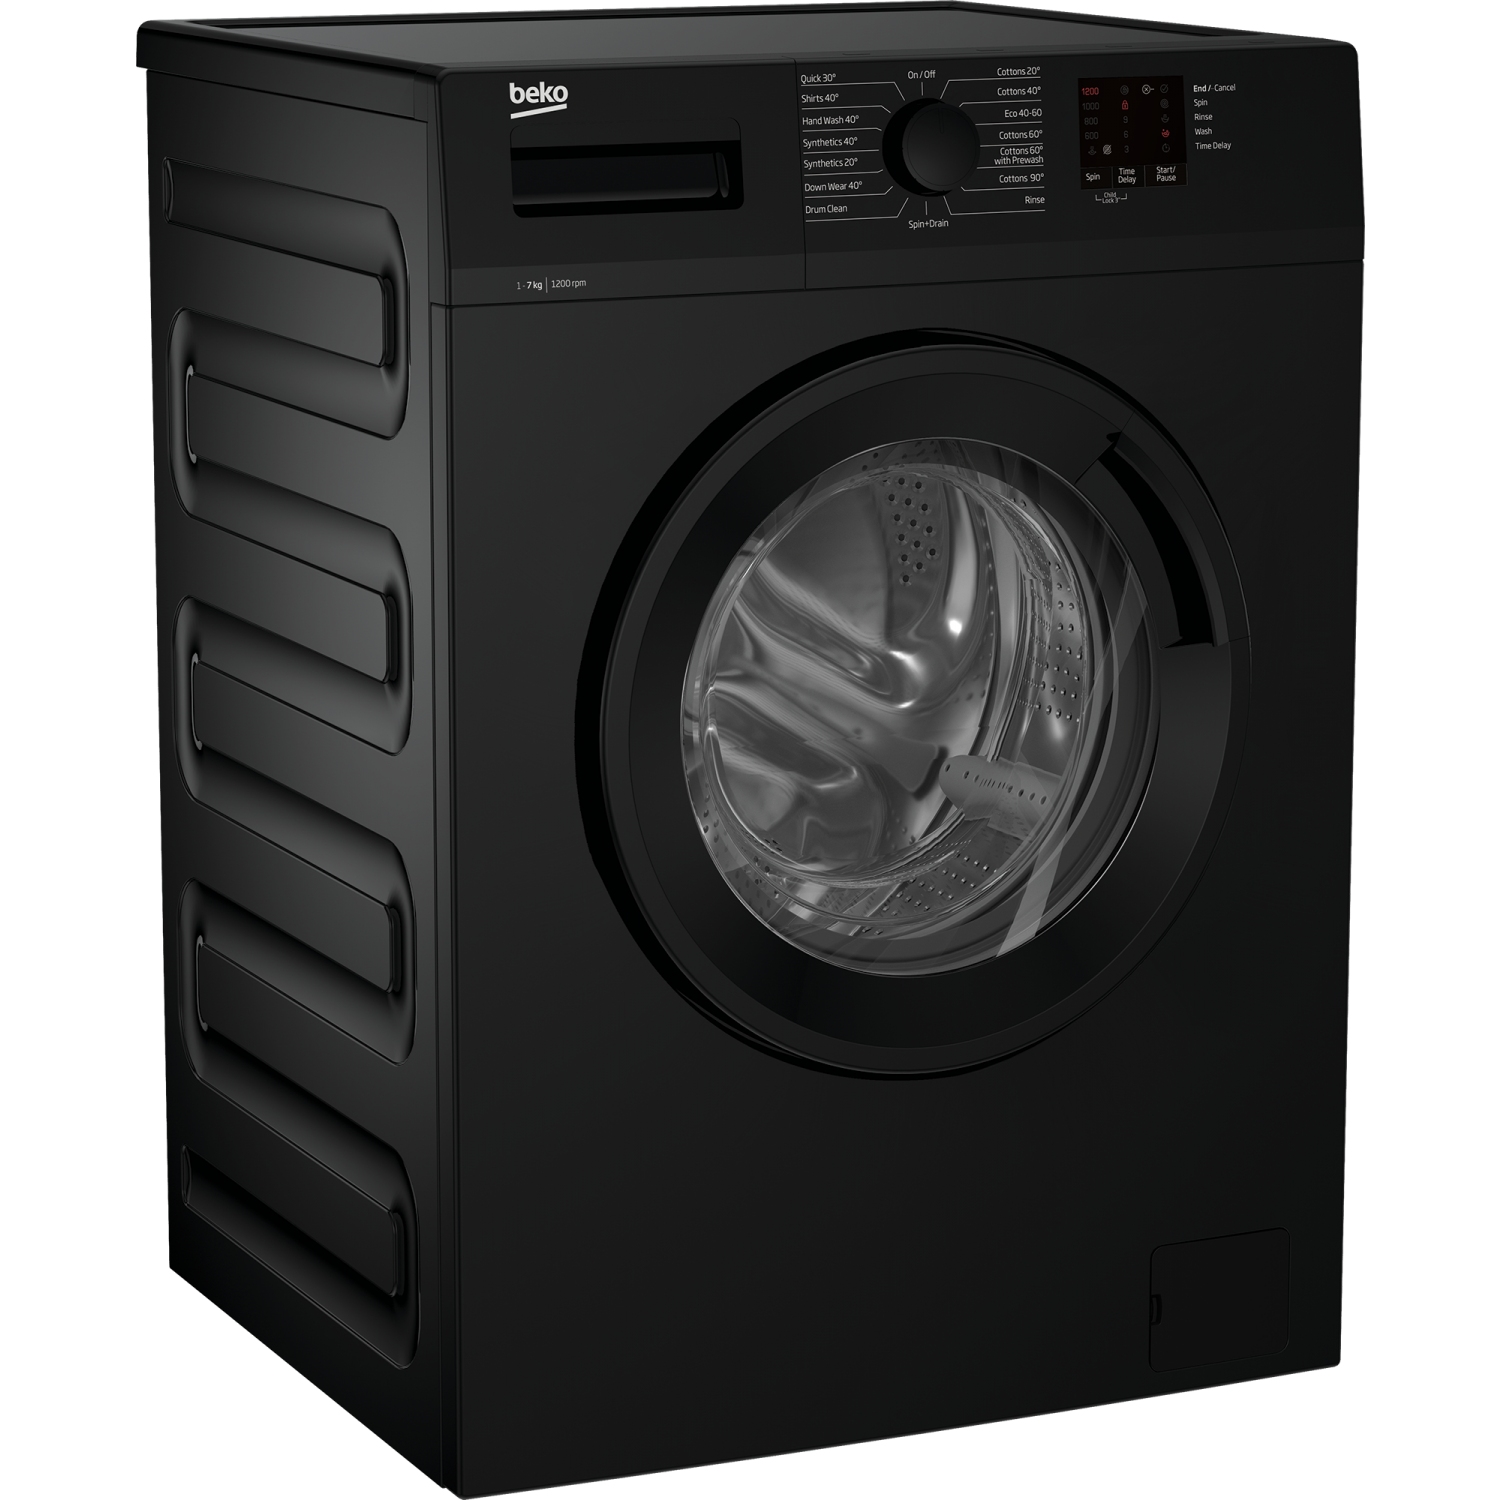 Beko WTK72042B 7kg 1200 Spin Washing Machine with Quick Programme - Black - 2